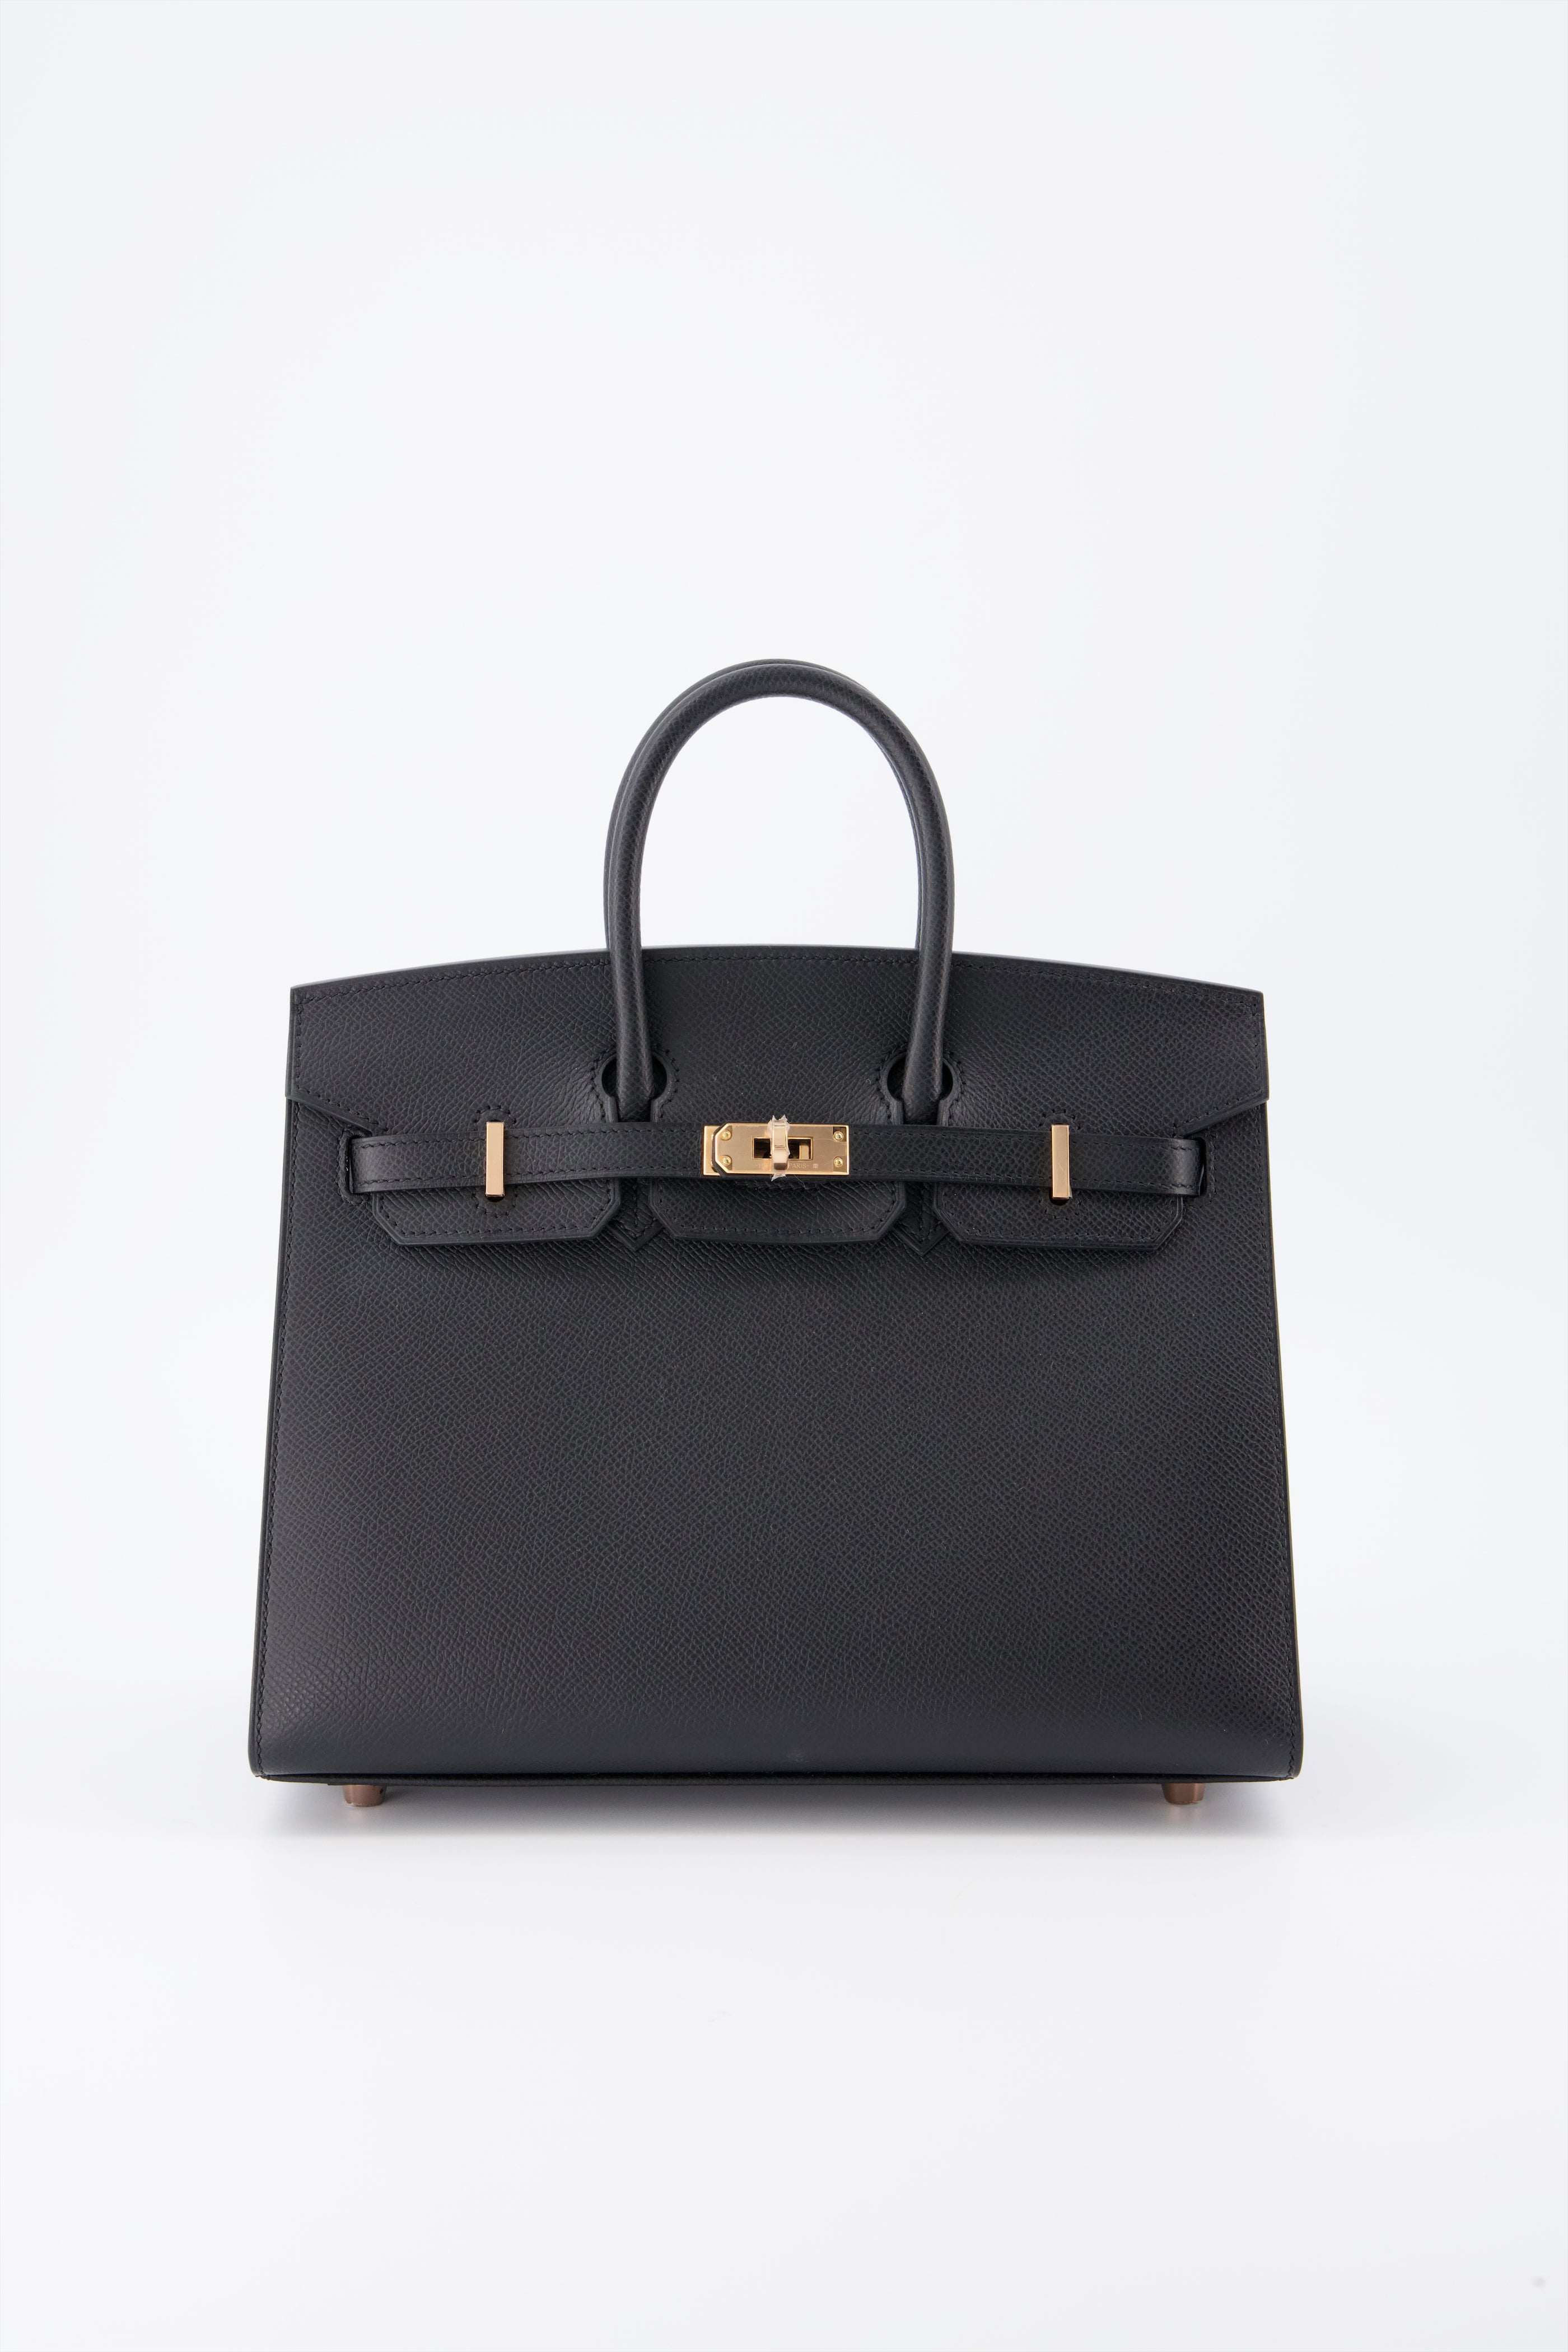 *Rare* Hermes Birkin 25 Black Sellier Handbag Epsom Leather With Gold Hardware. Investment Piece.